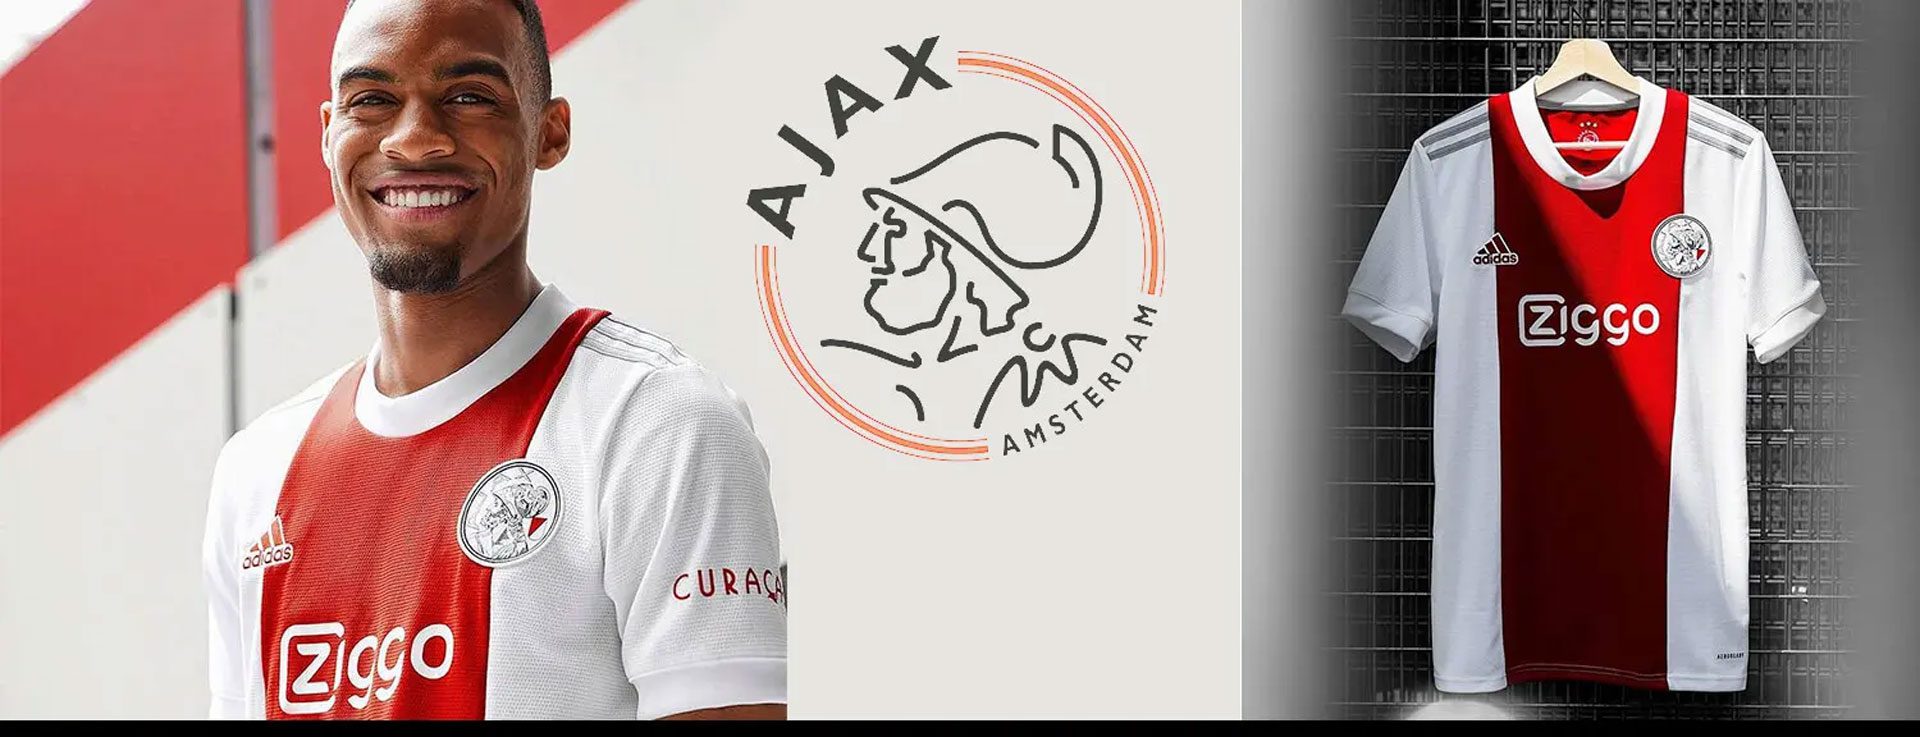 Ajax jerseys